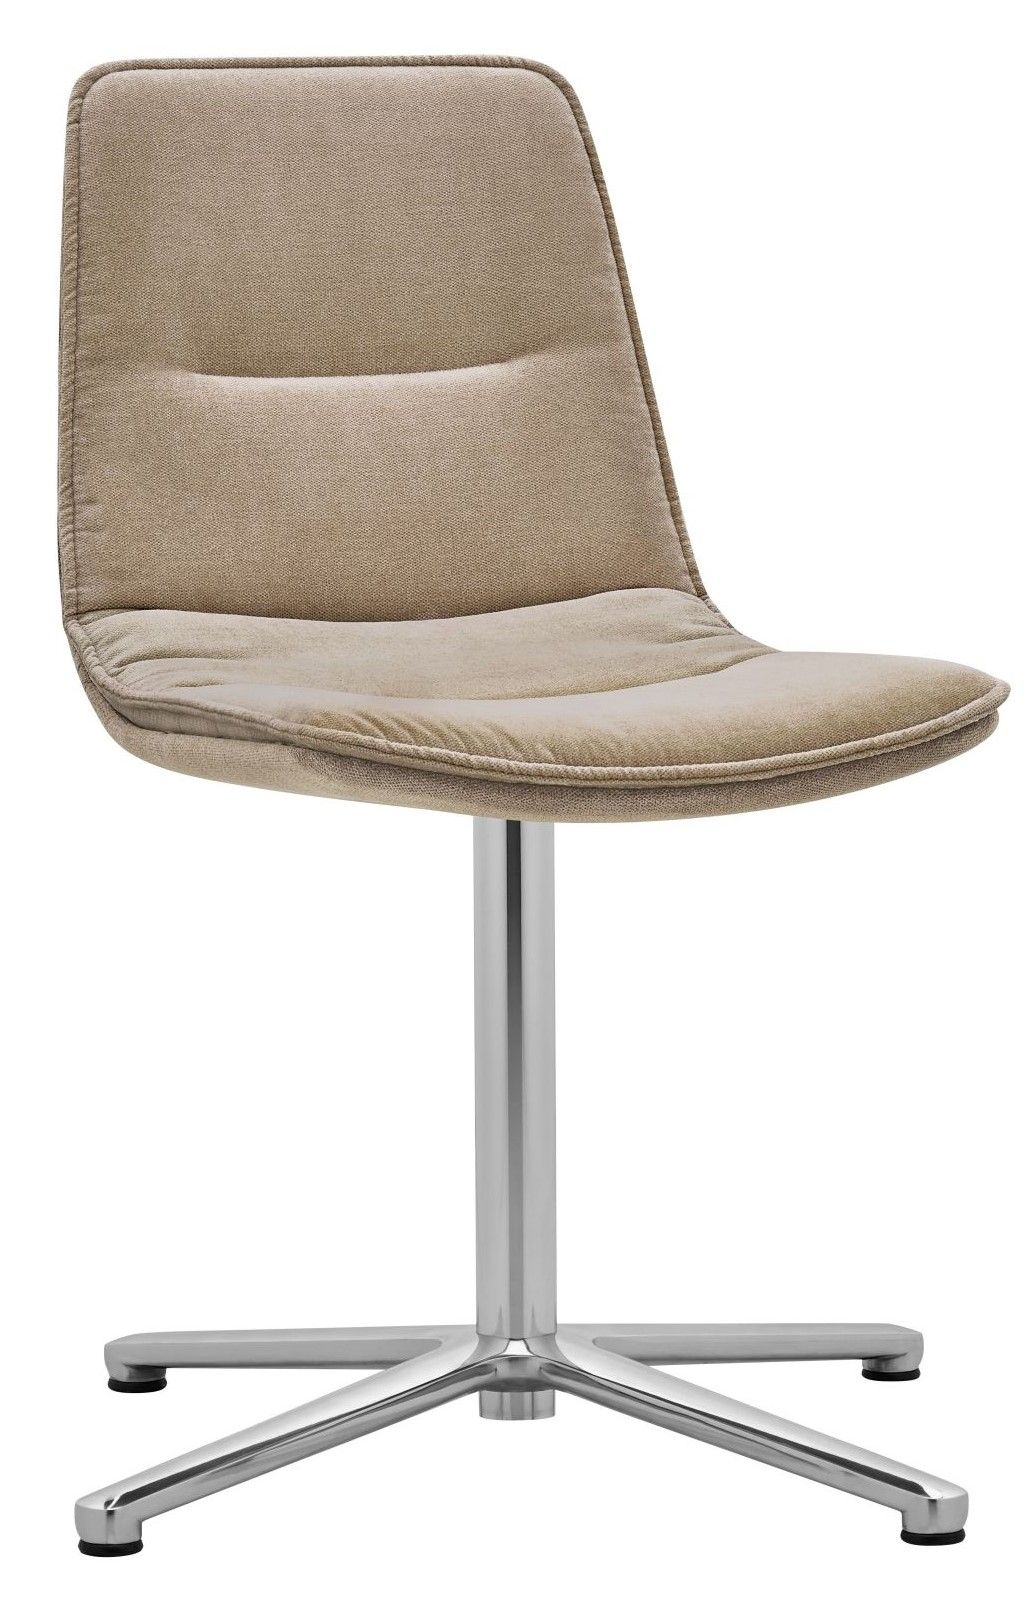 RIM - Otočná židle EDGE 4201.01 - 